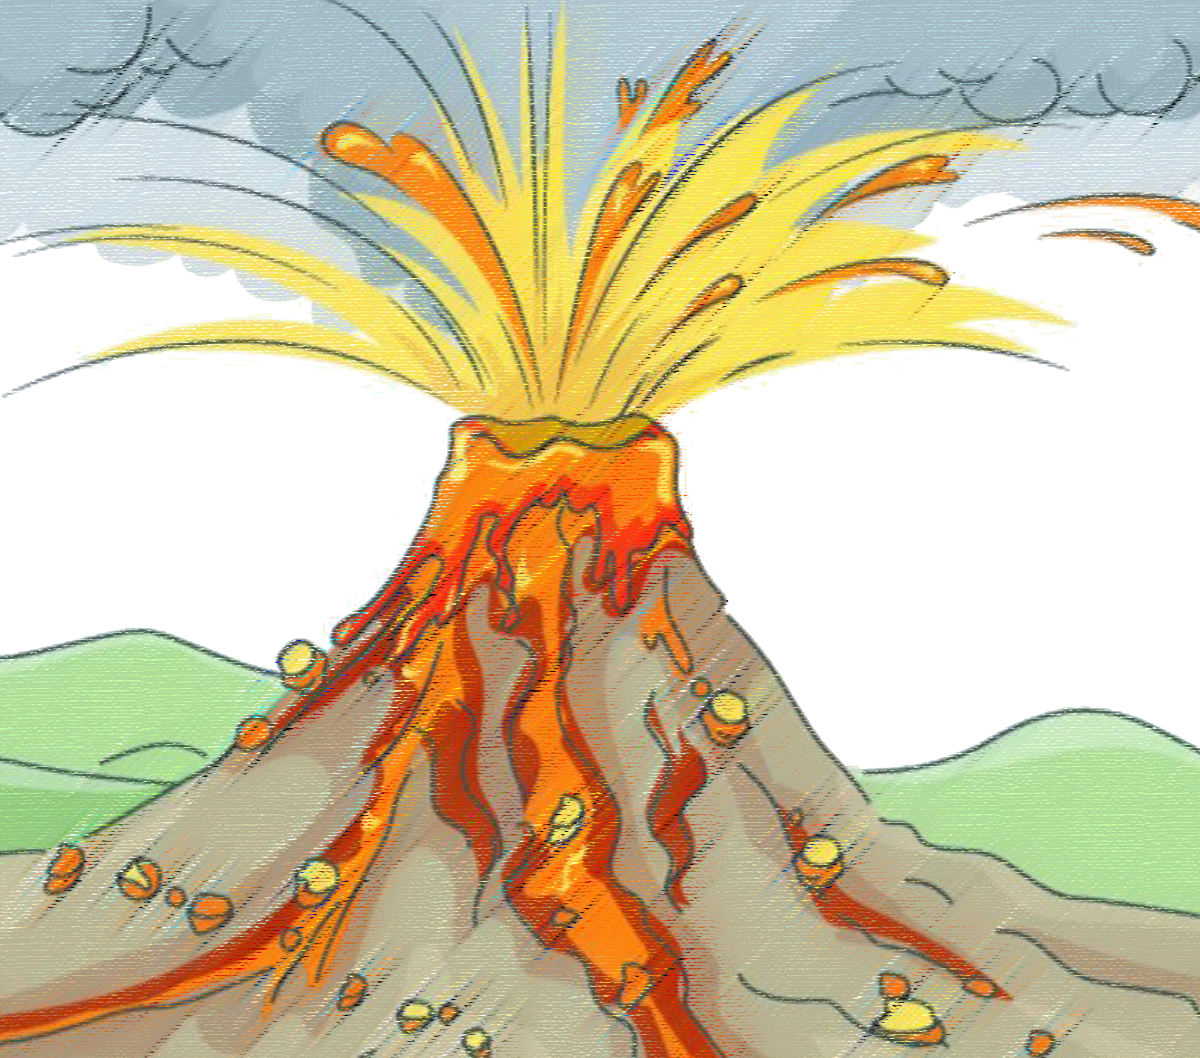 Volcanic ash xc ruption. Geology clipart volcano